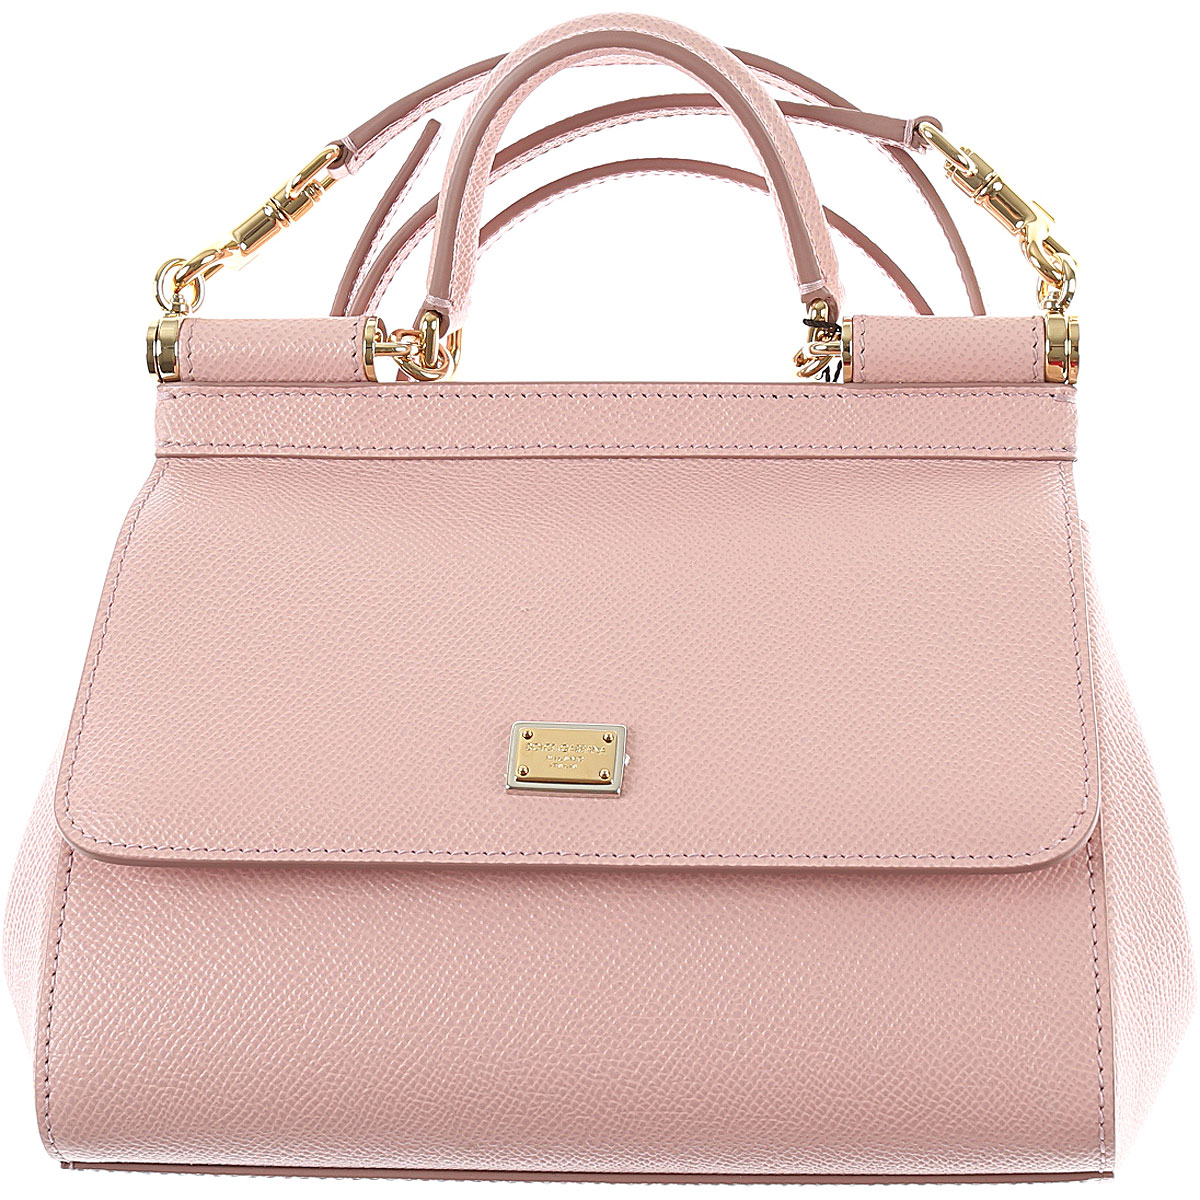 Handbags Dolce & Gabbana, Style code: bb6003-a1001-8h402